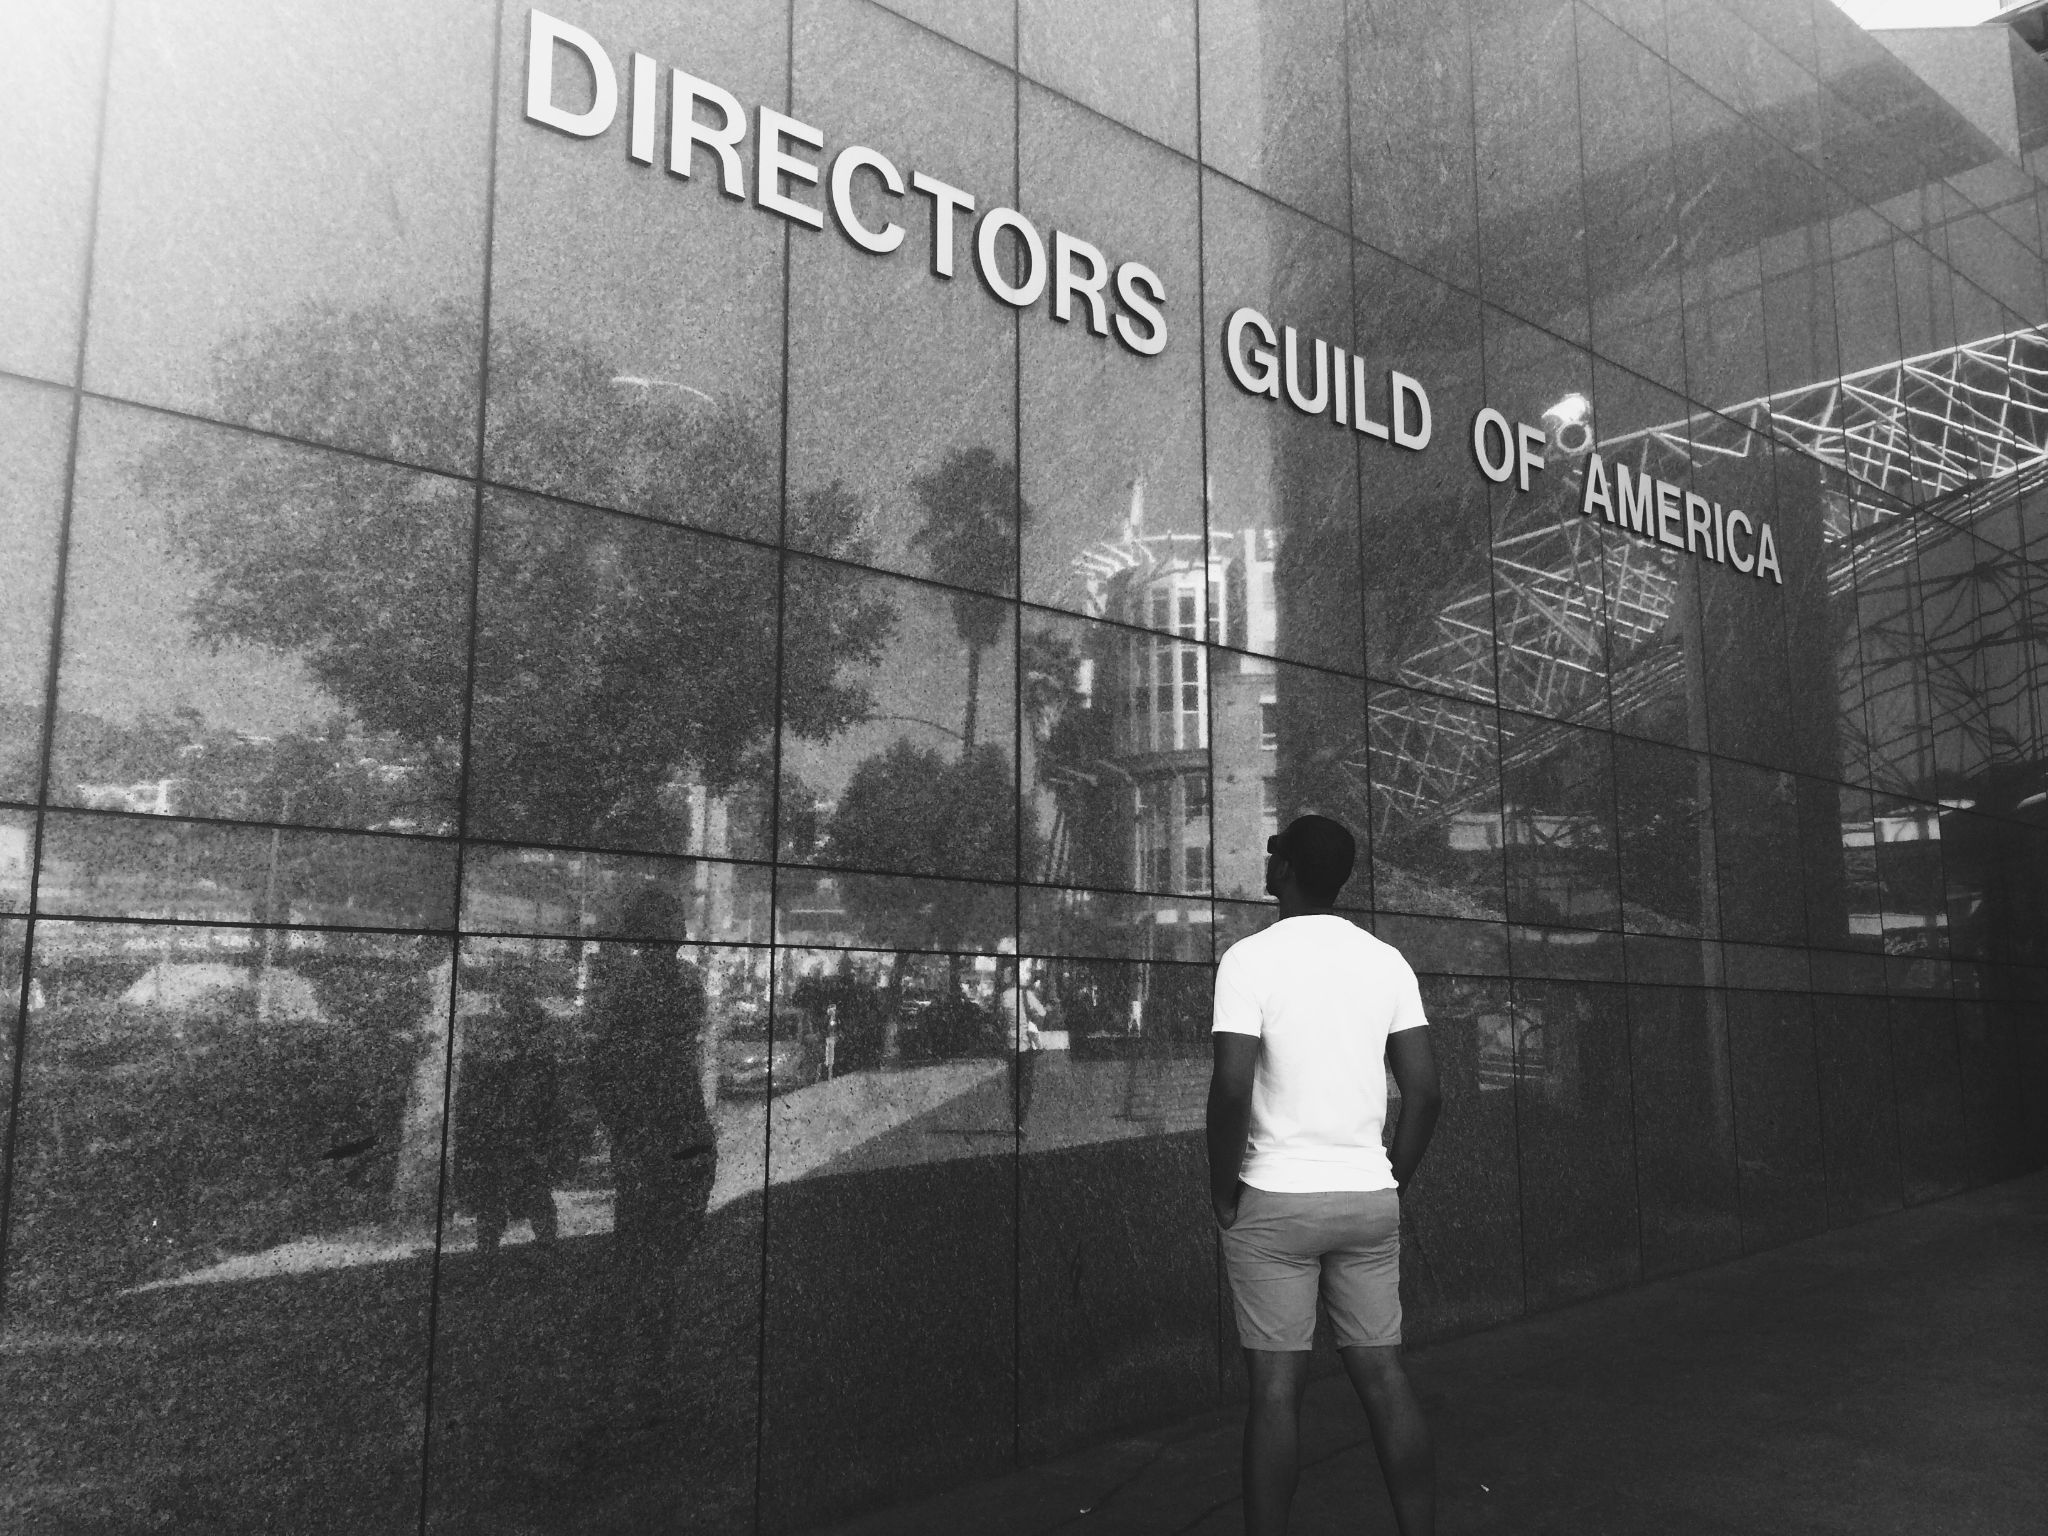 C&I Studios Joshua Otis Miller Chief Executive Officer in front of Director's Guild of America building in LA